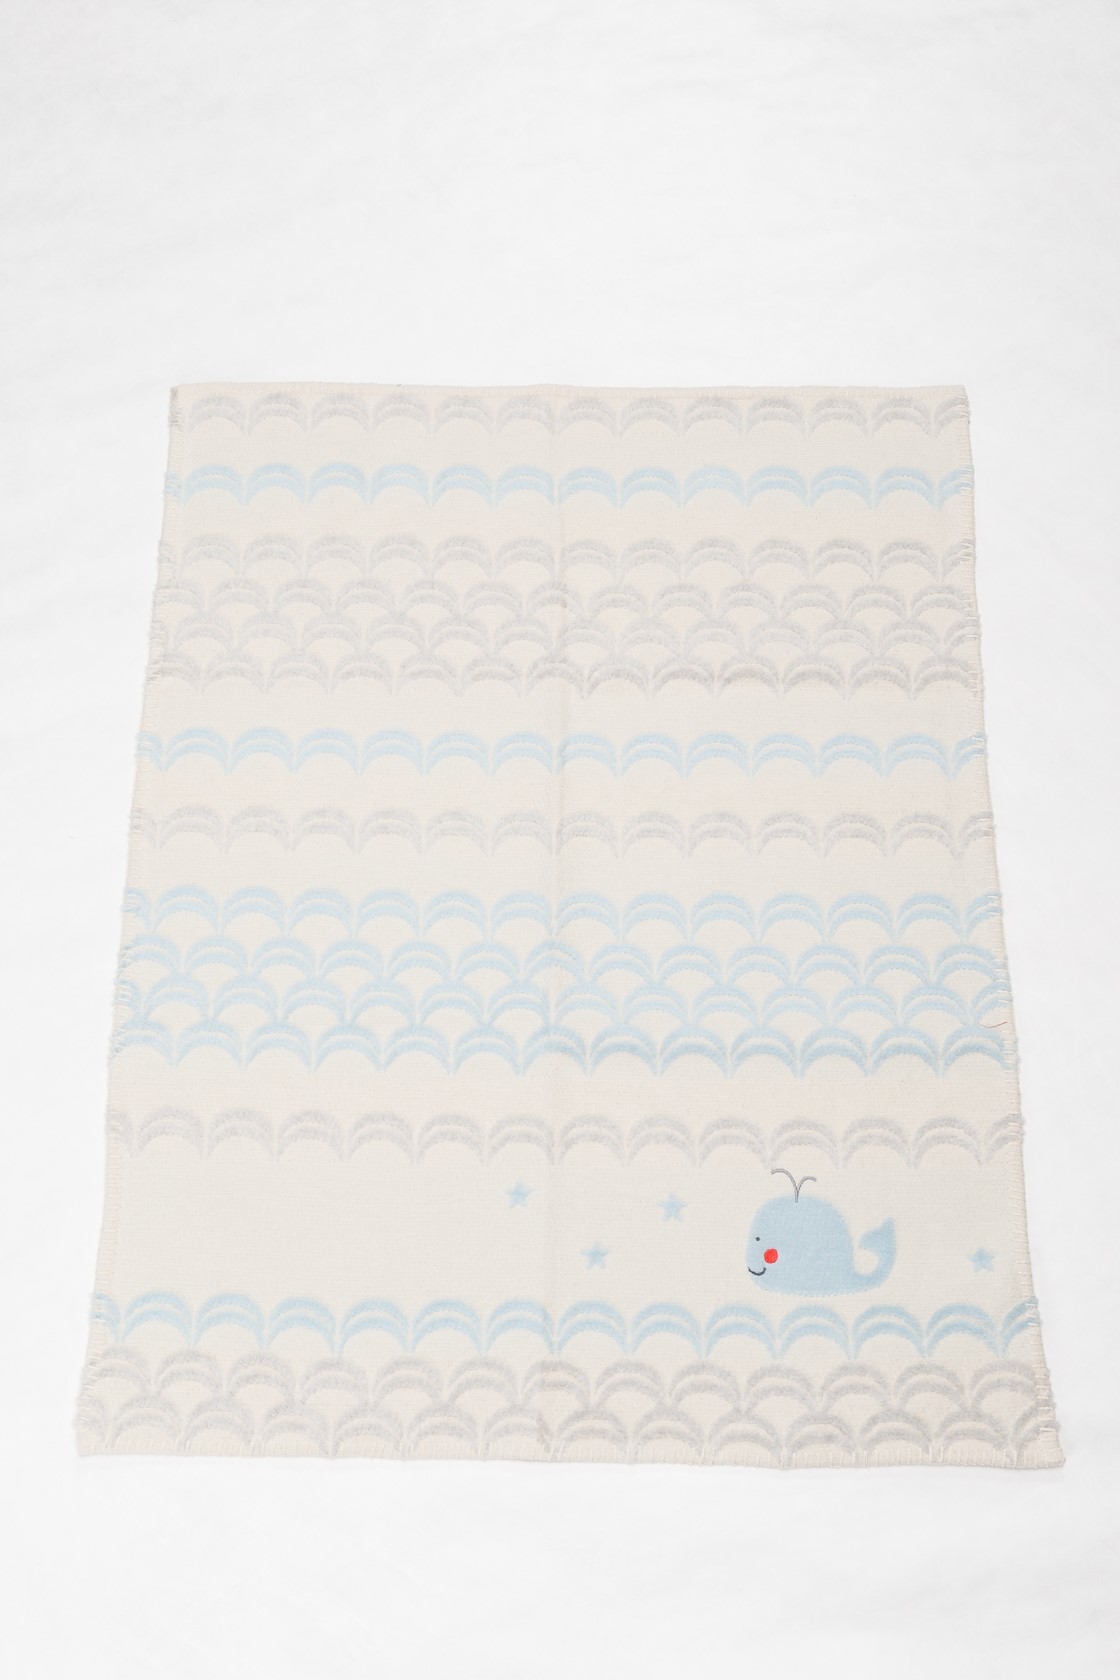 DAVID FUSSENEGGER Decke Kinderdecke Finn Wal mit stickerei rohweiß 65x90 cm